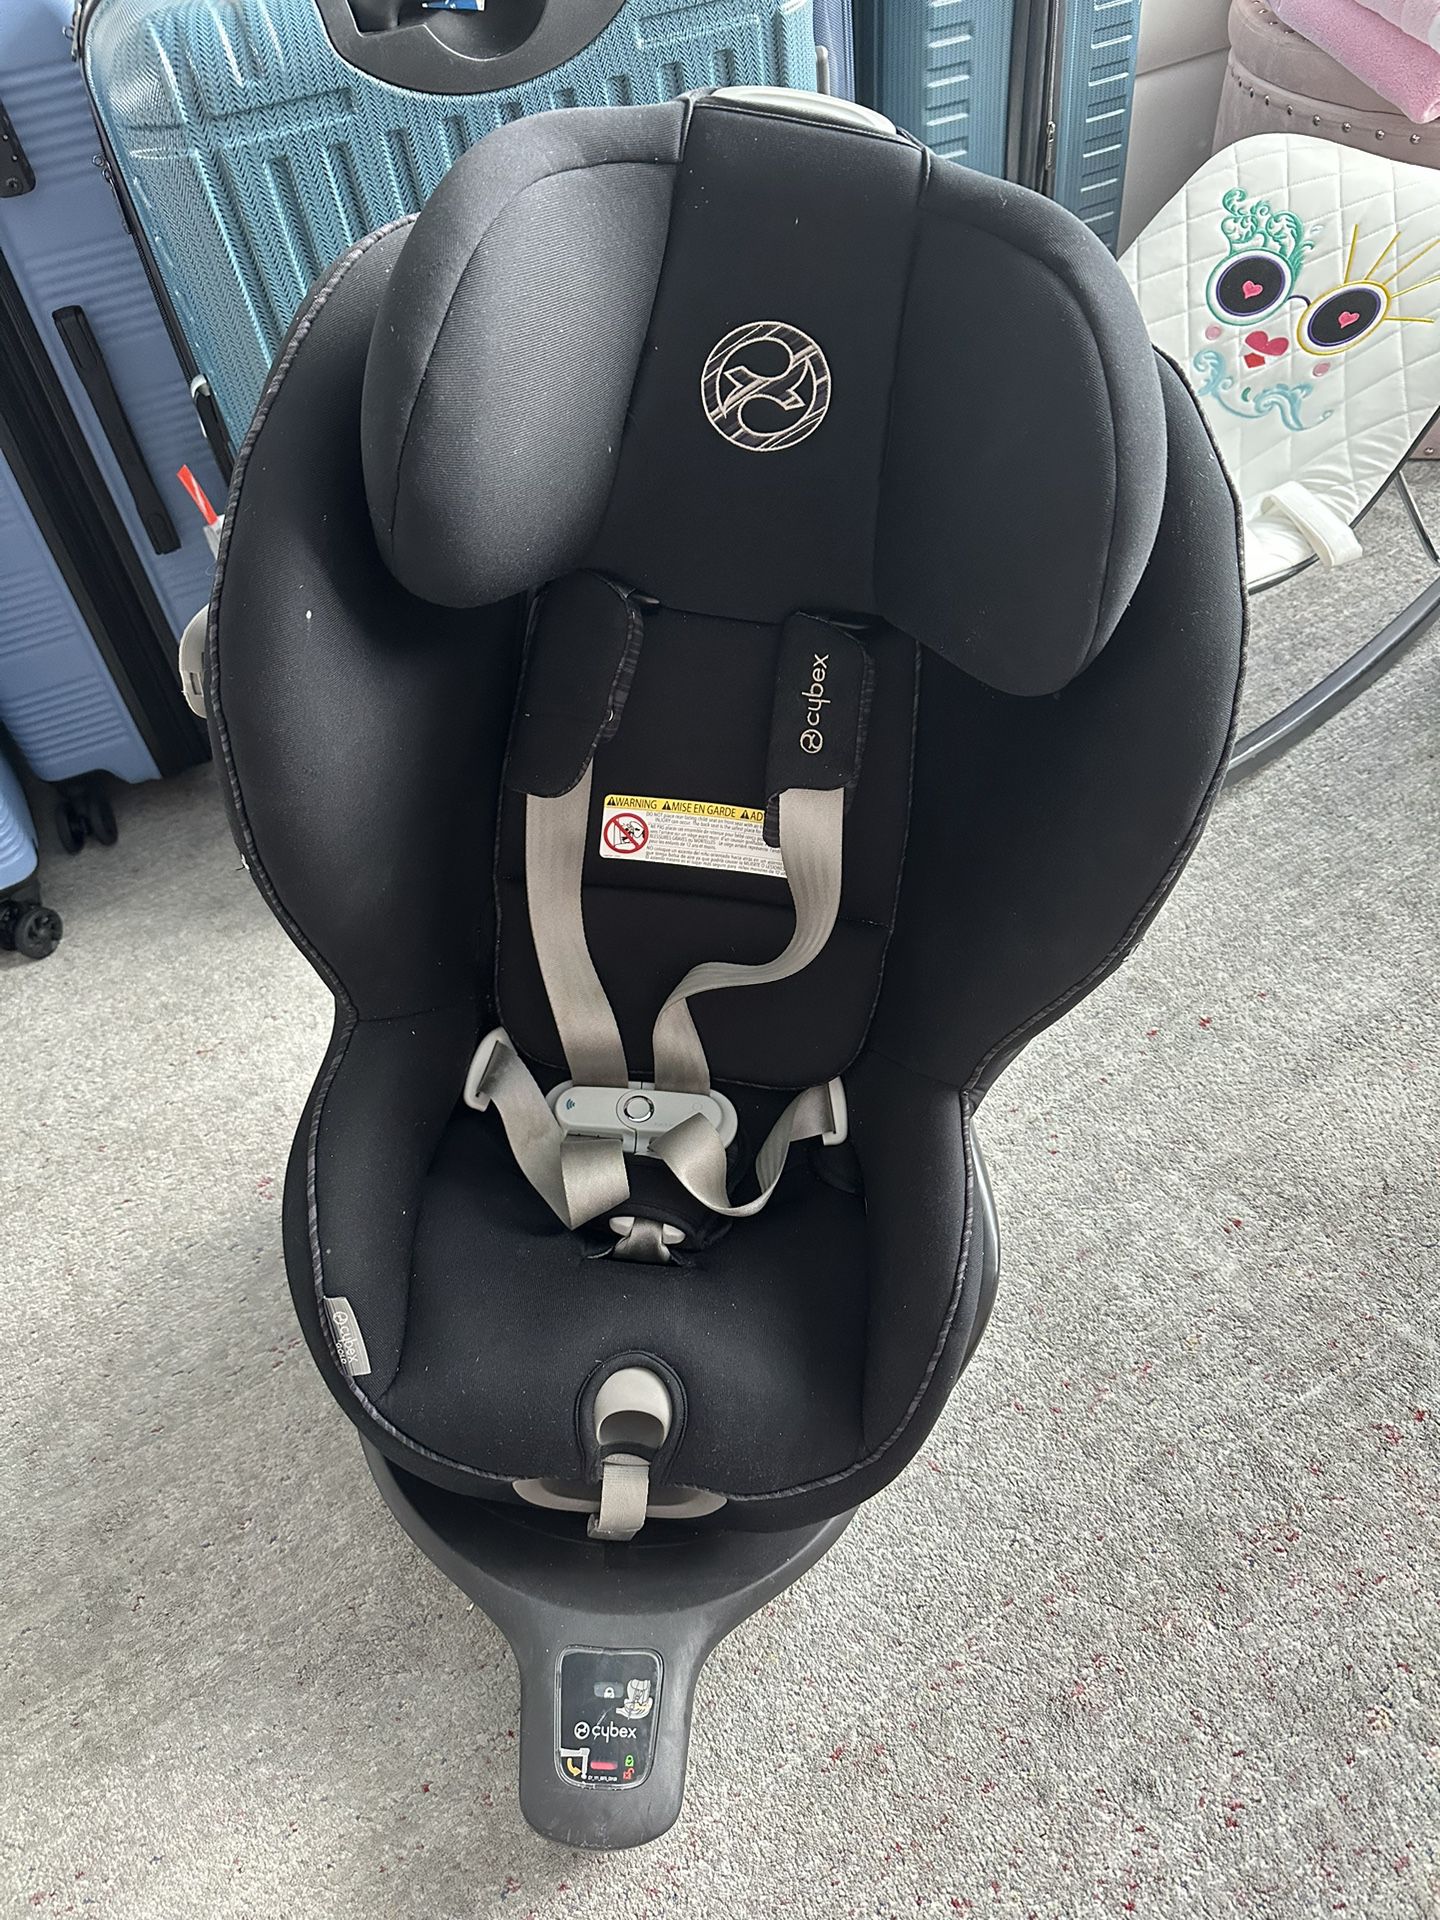 Cybex Baby/Infant Car Seat